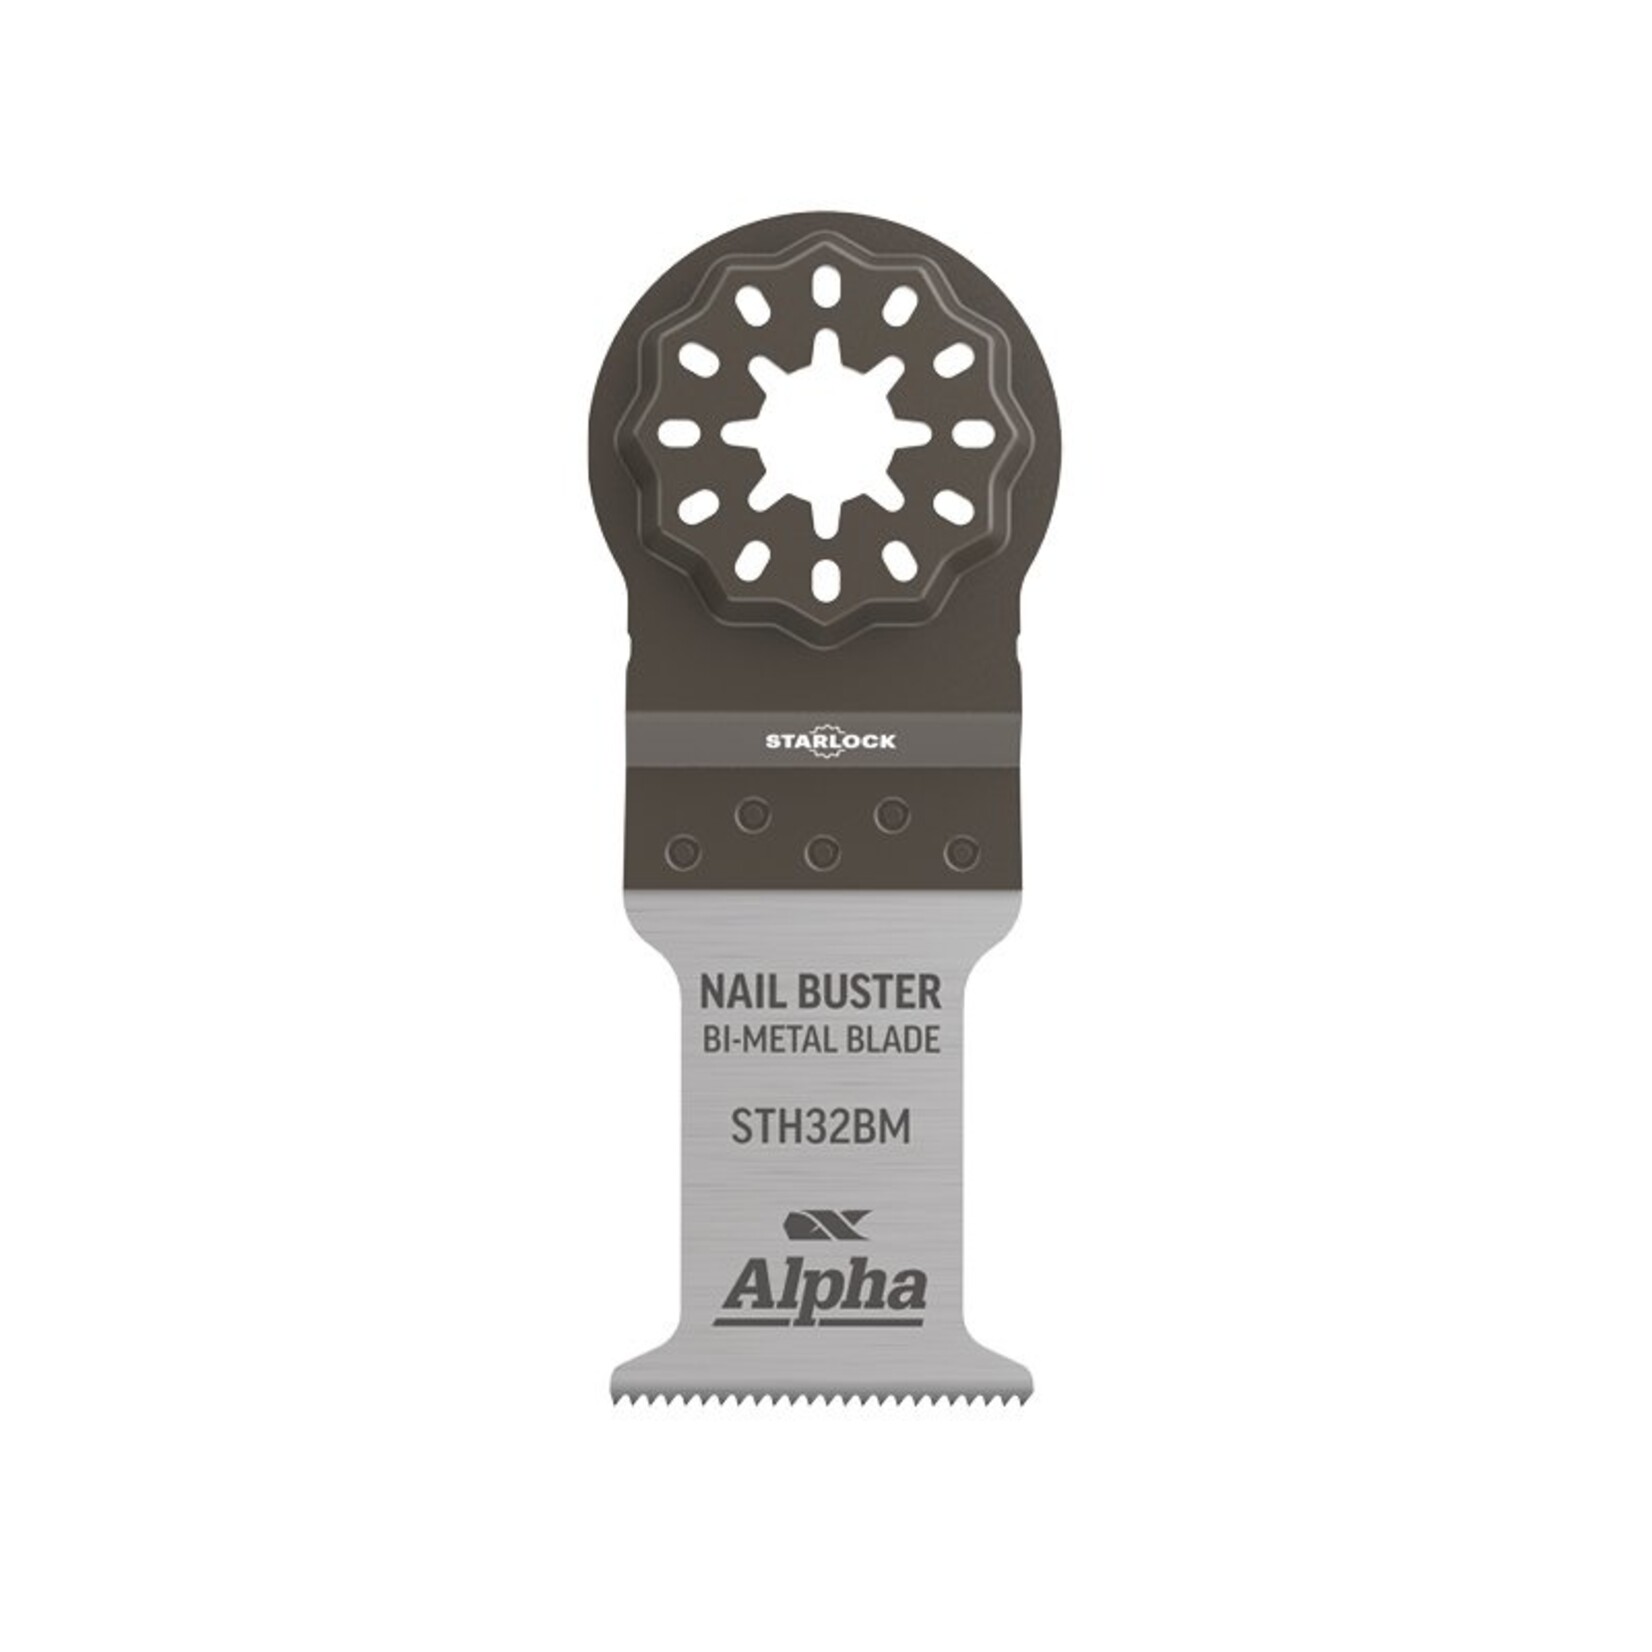 Alpha Starlock Nail Buster 32mm Bi-Metal Multi-Tool Blade